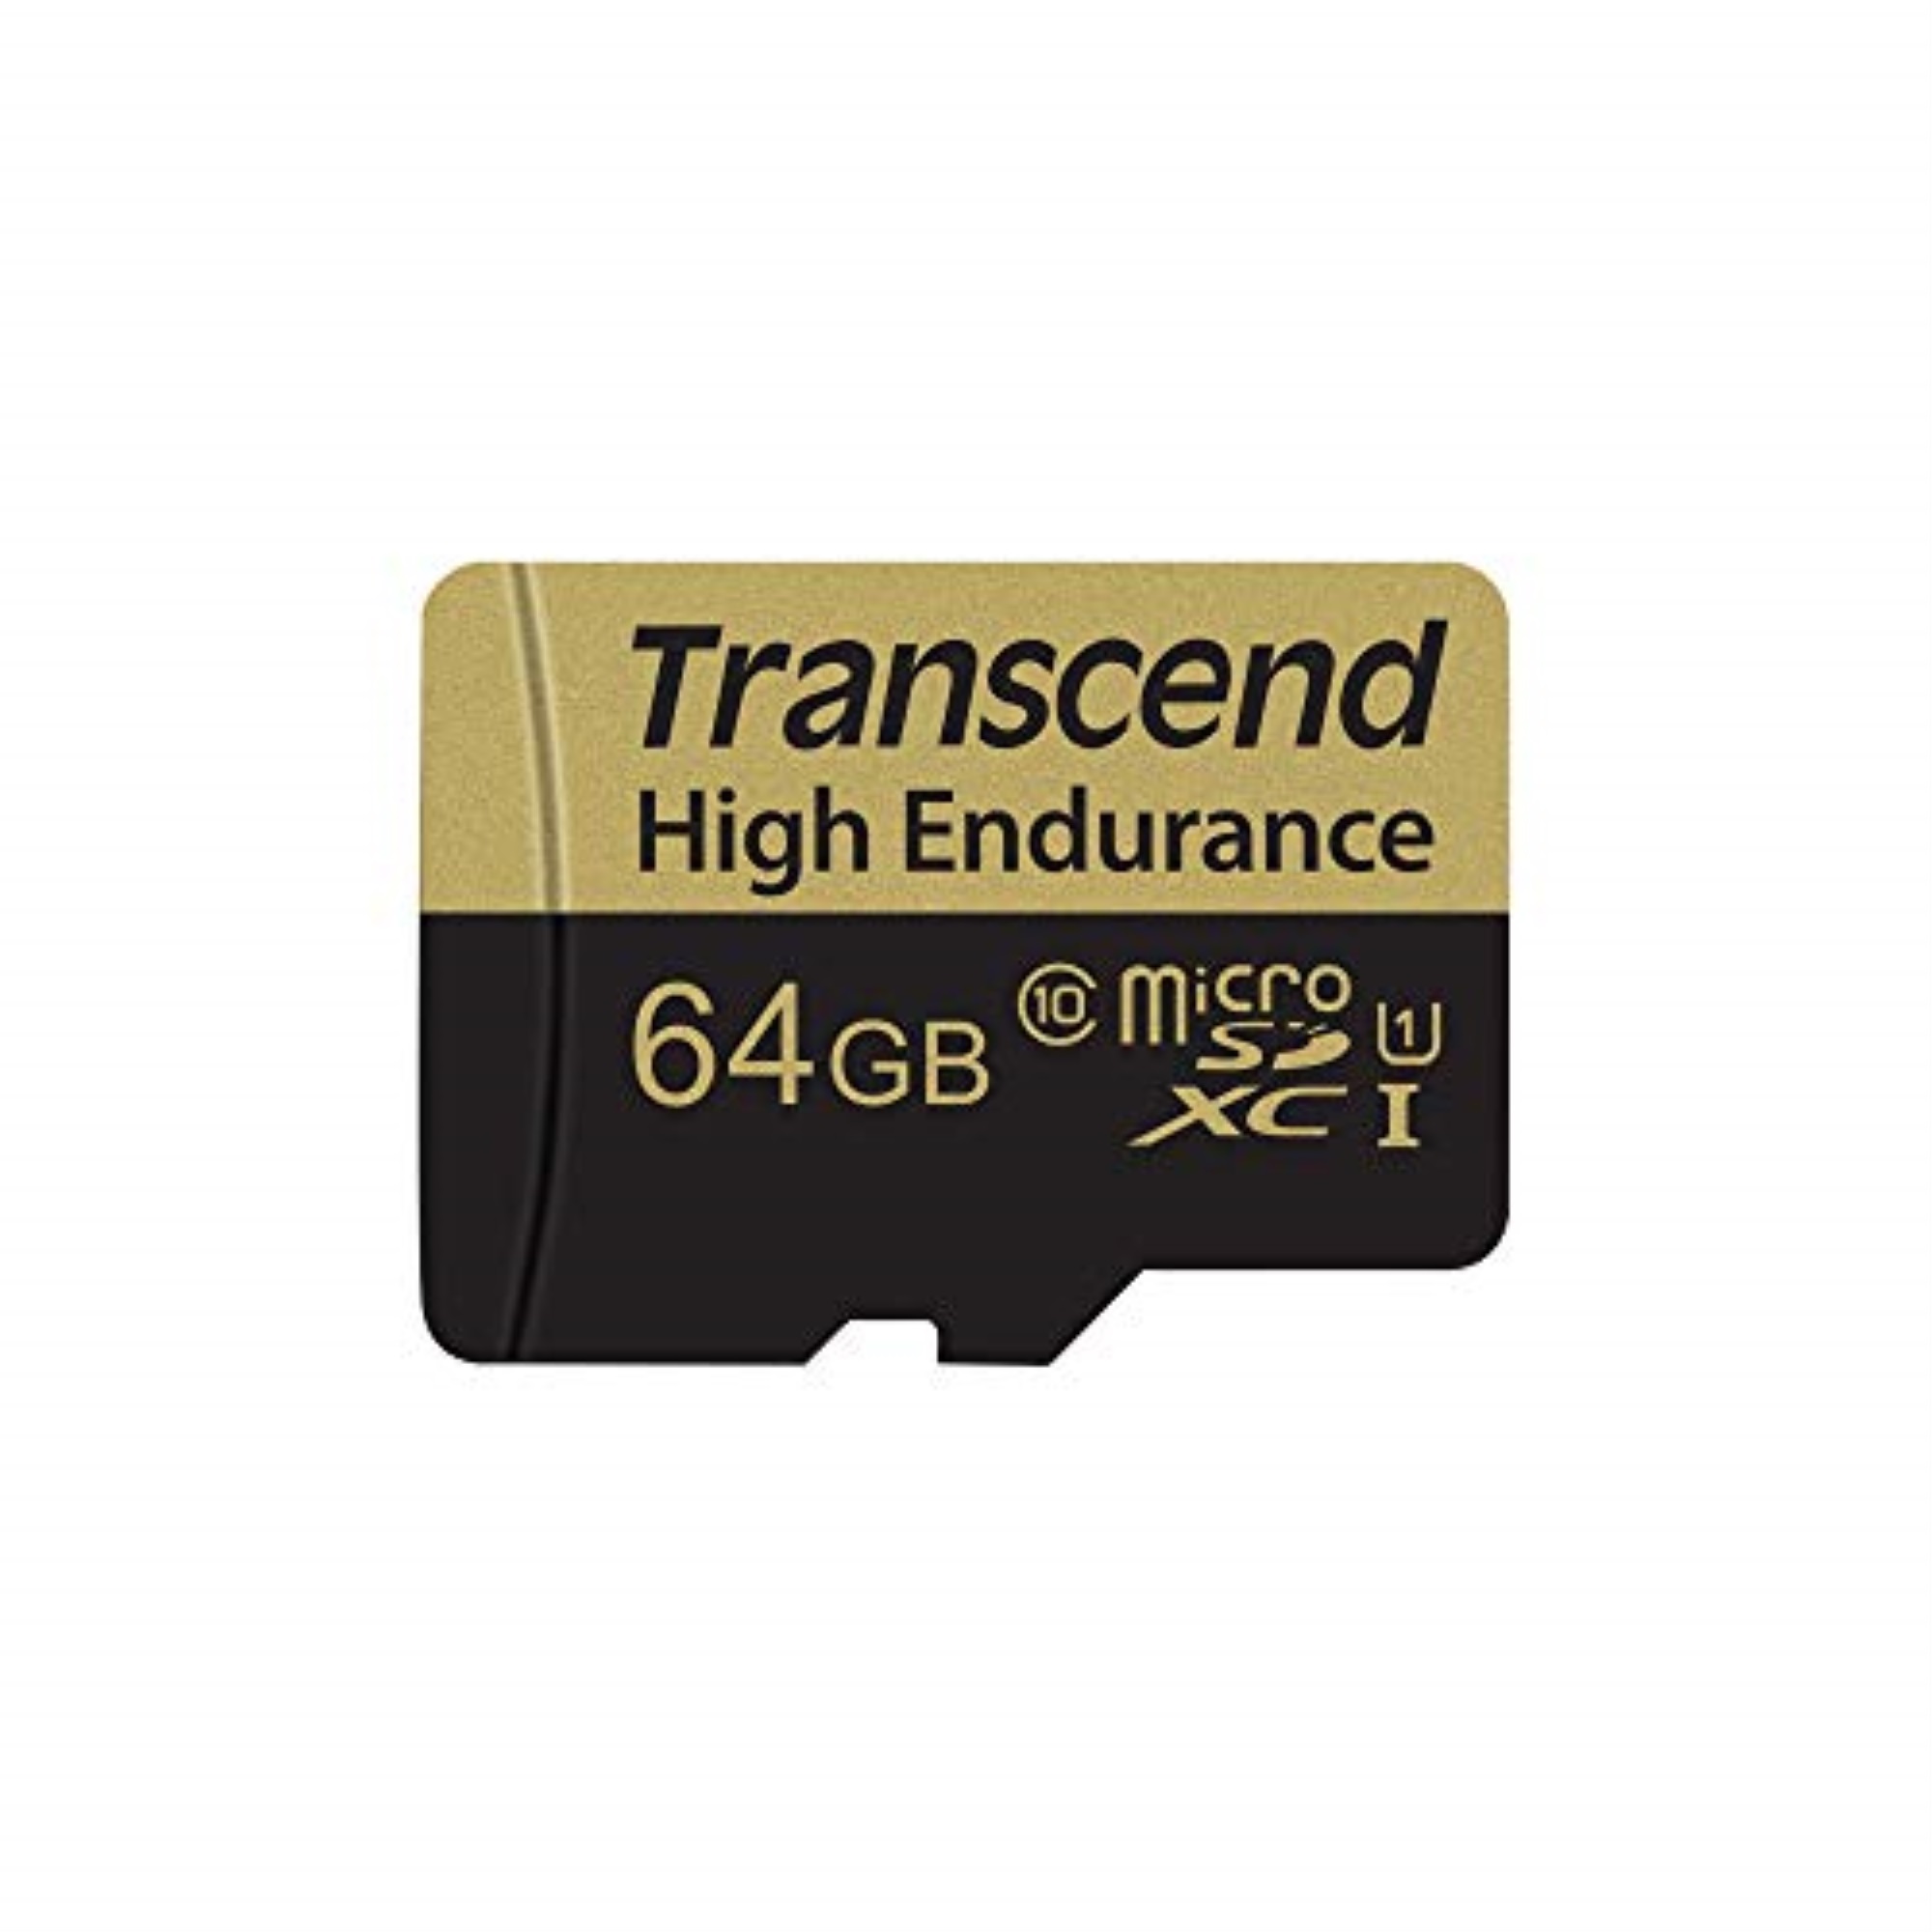 Transcend 64GB USD Card (Class 10) Video Recording